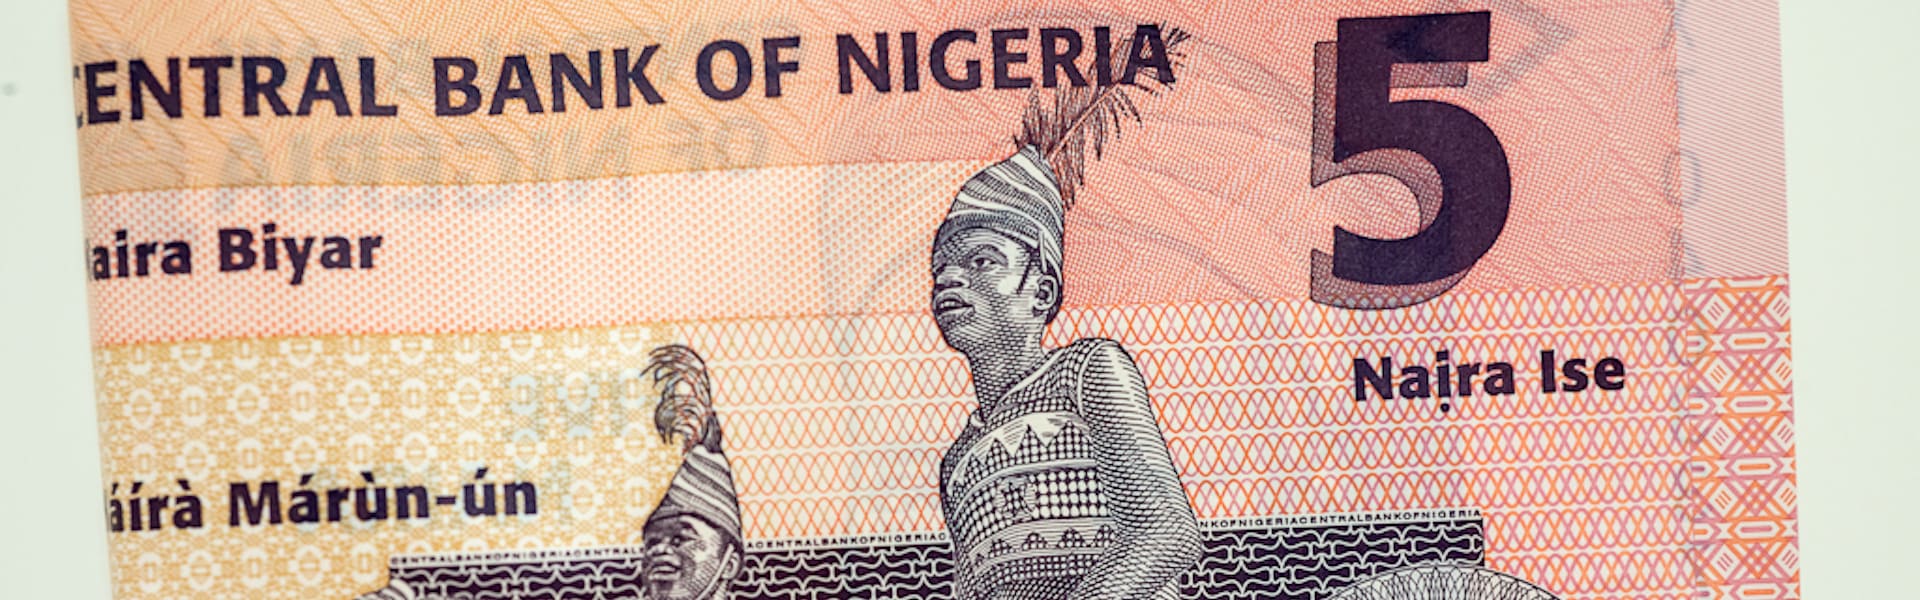 Nigerian currency